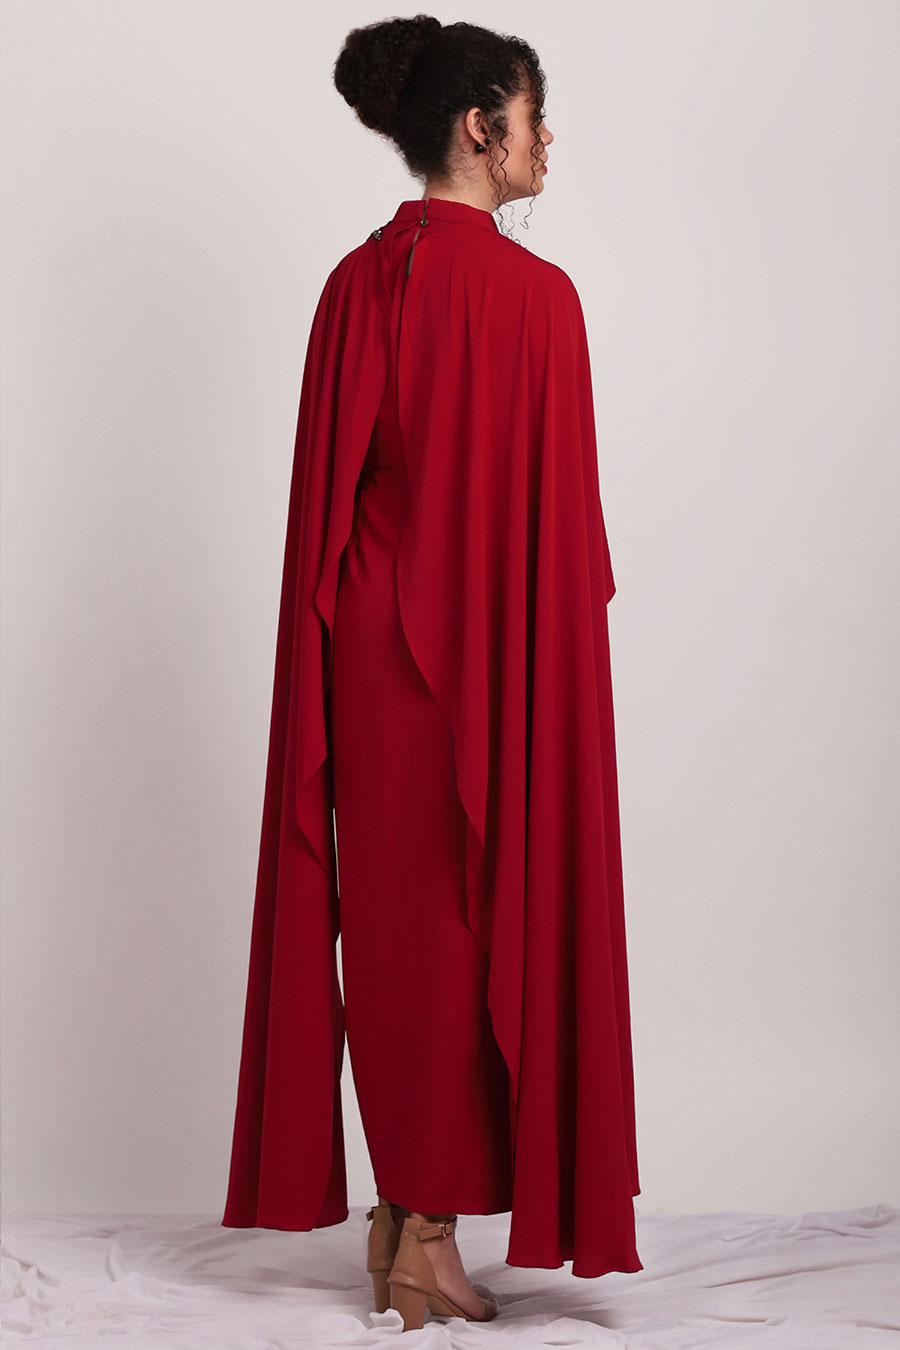 Metallic Feather Red Drape Dress